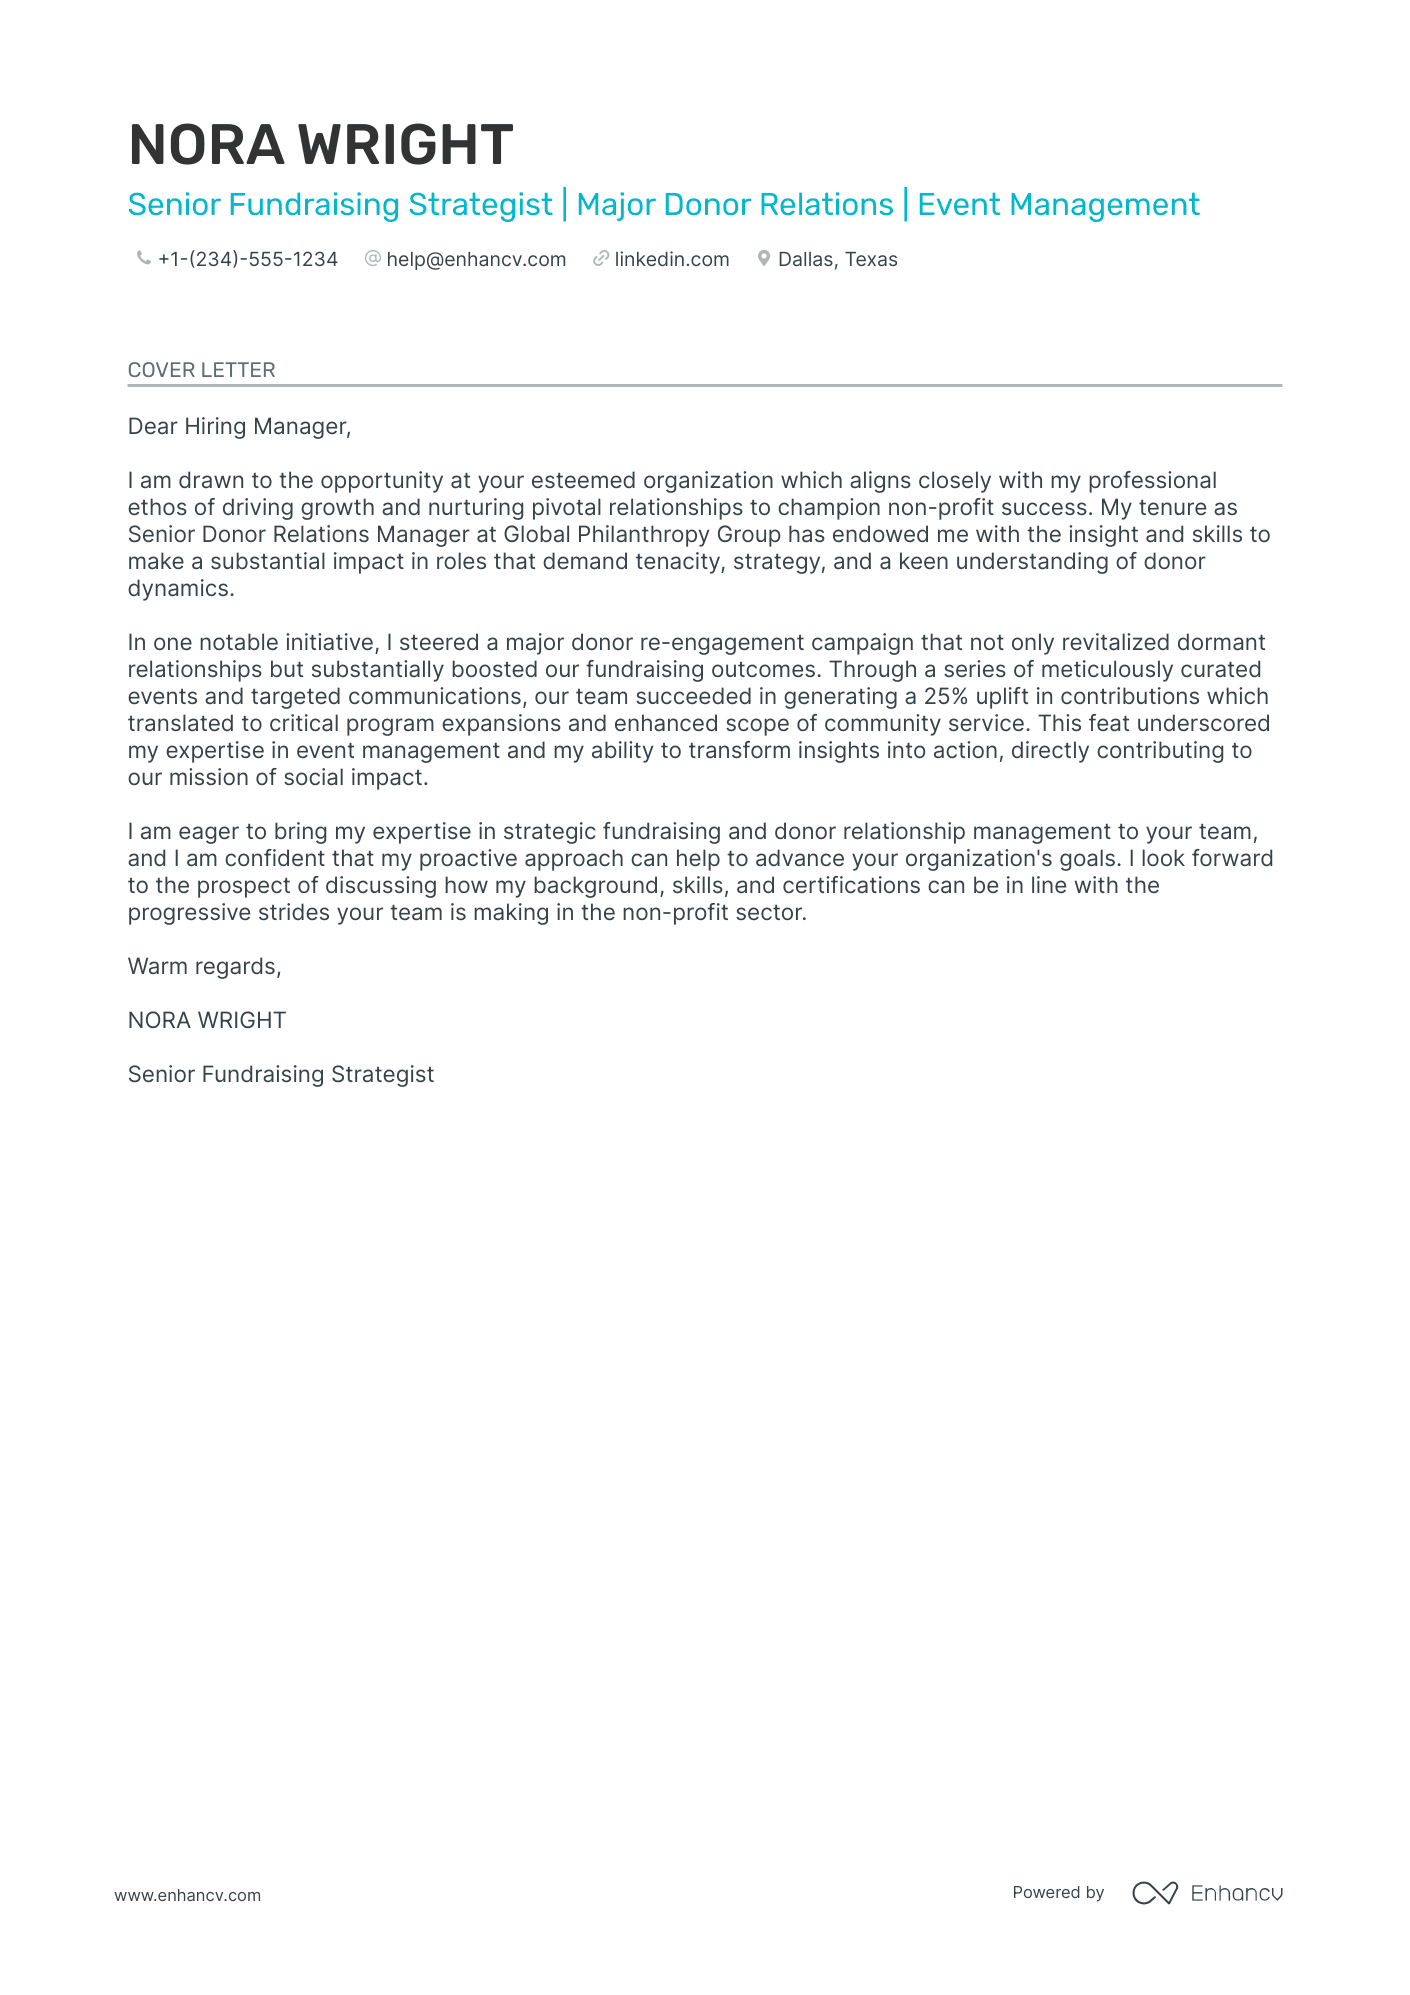 Finance Director cover letter